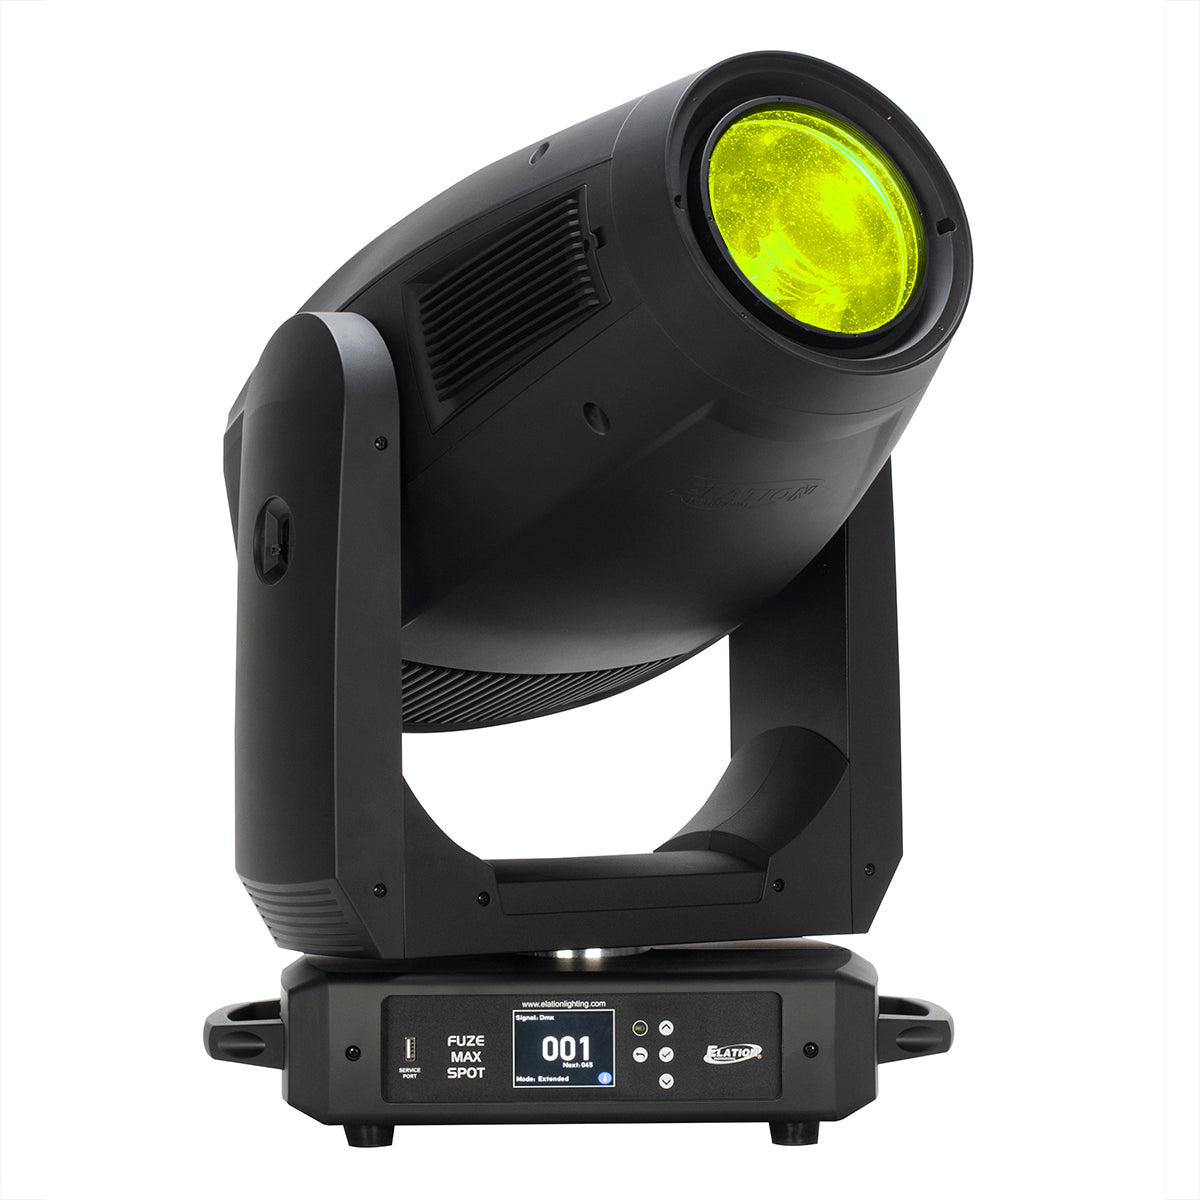 Elation FUZE MAX SPOT - Automated Full Color LED Spot Light Fixture, yellow